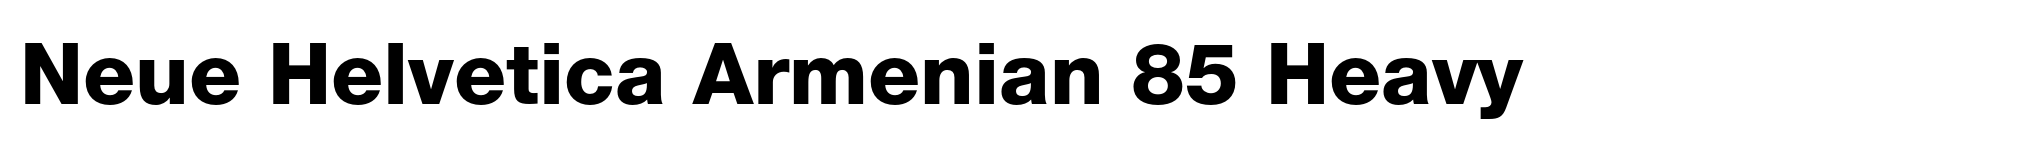 Neue Helvetica Armenian 85 Heavy image